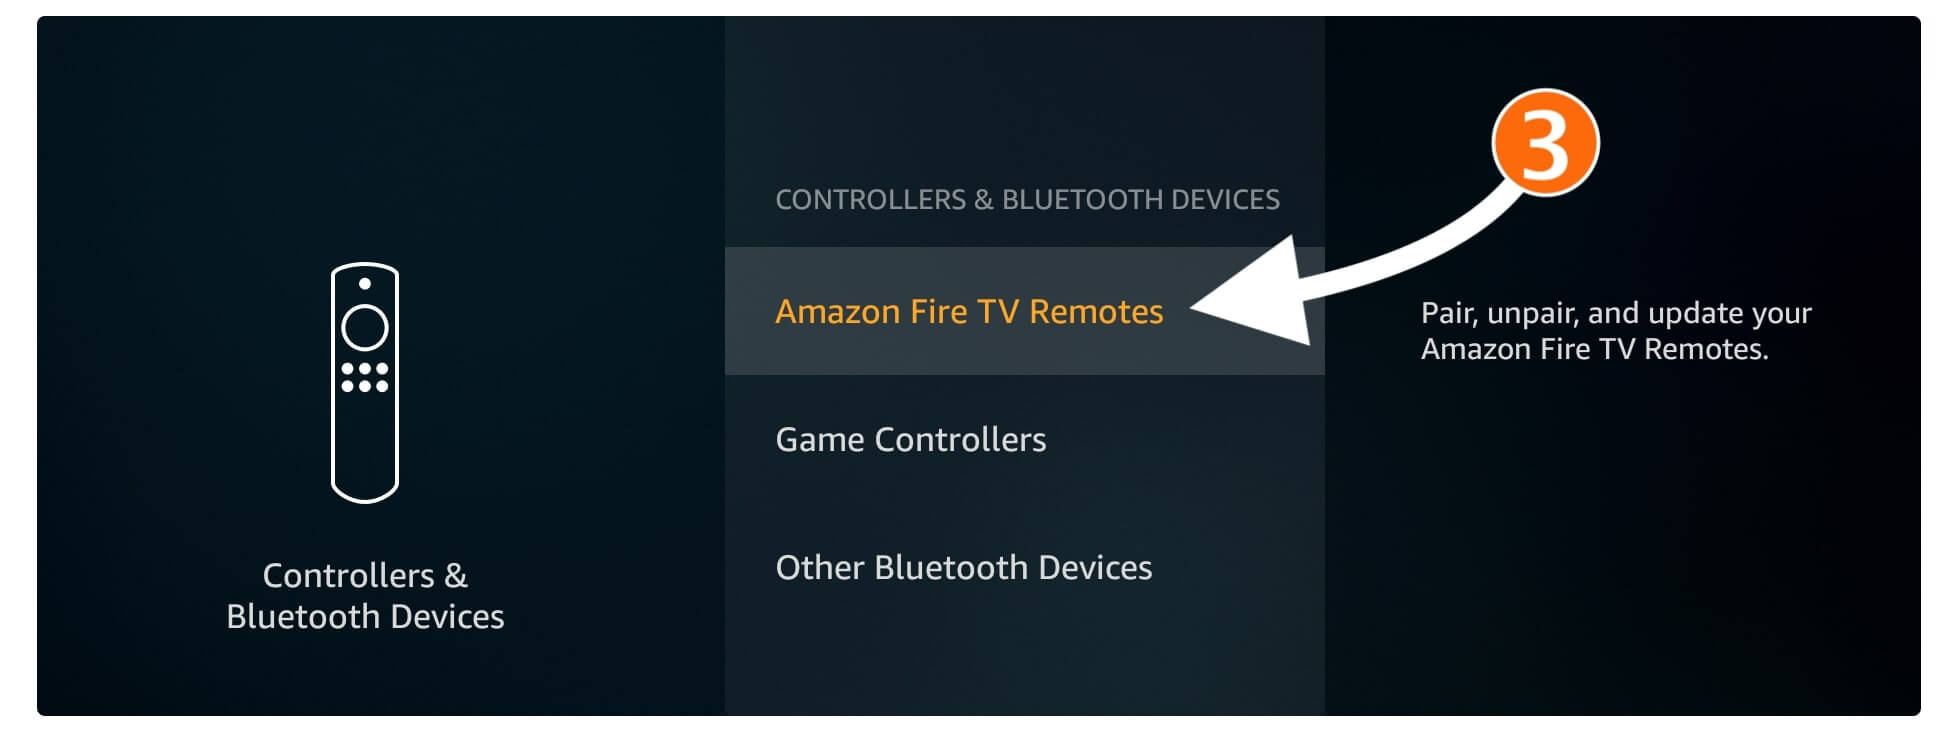 Amazon-Fire-Tv-Remotes